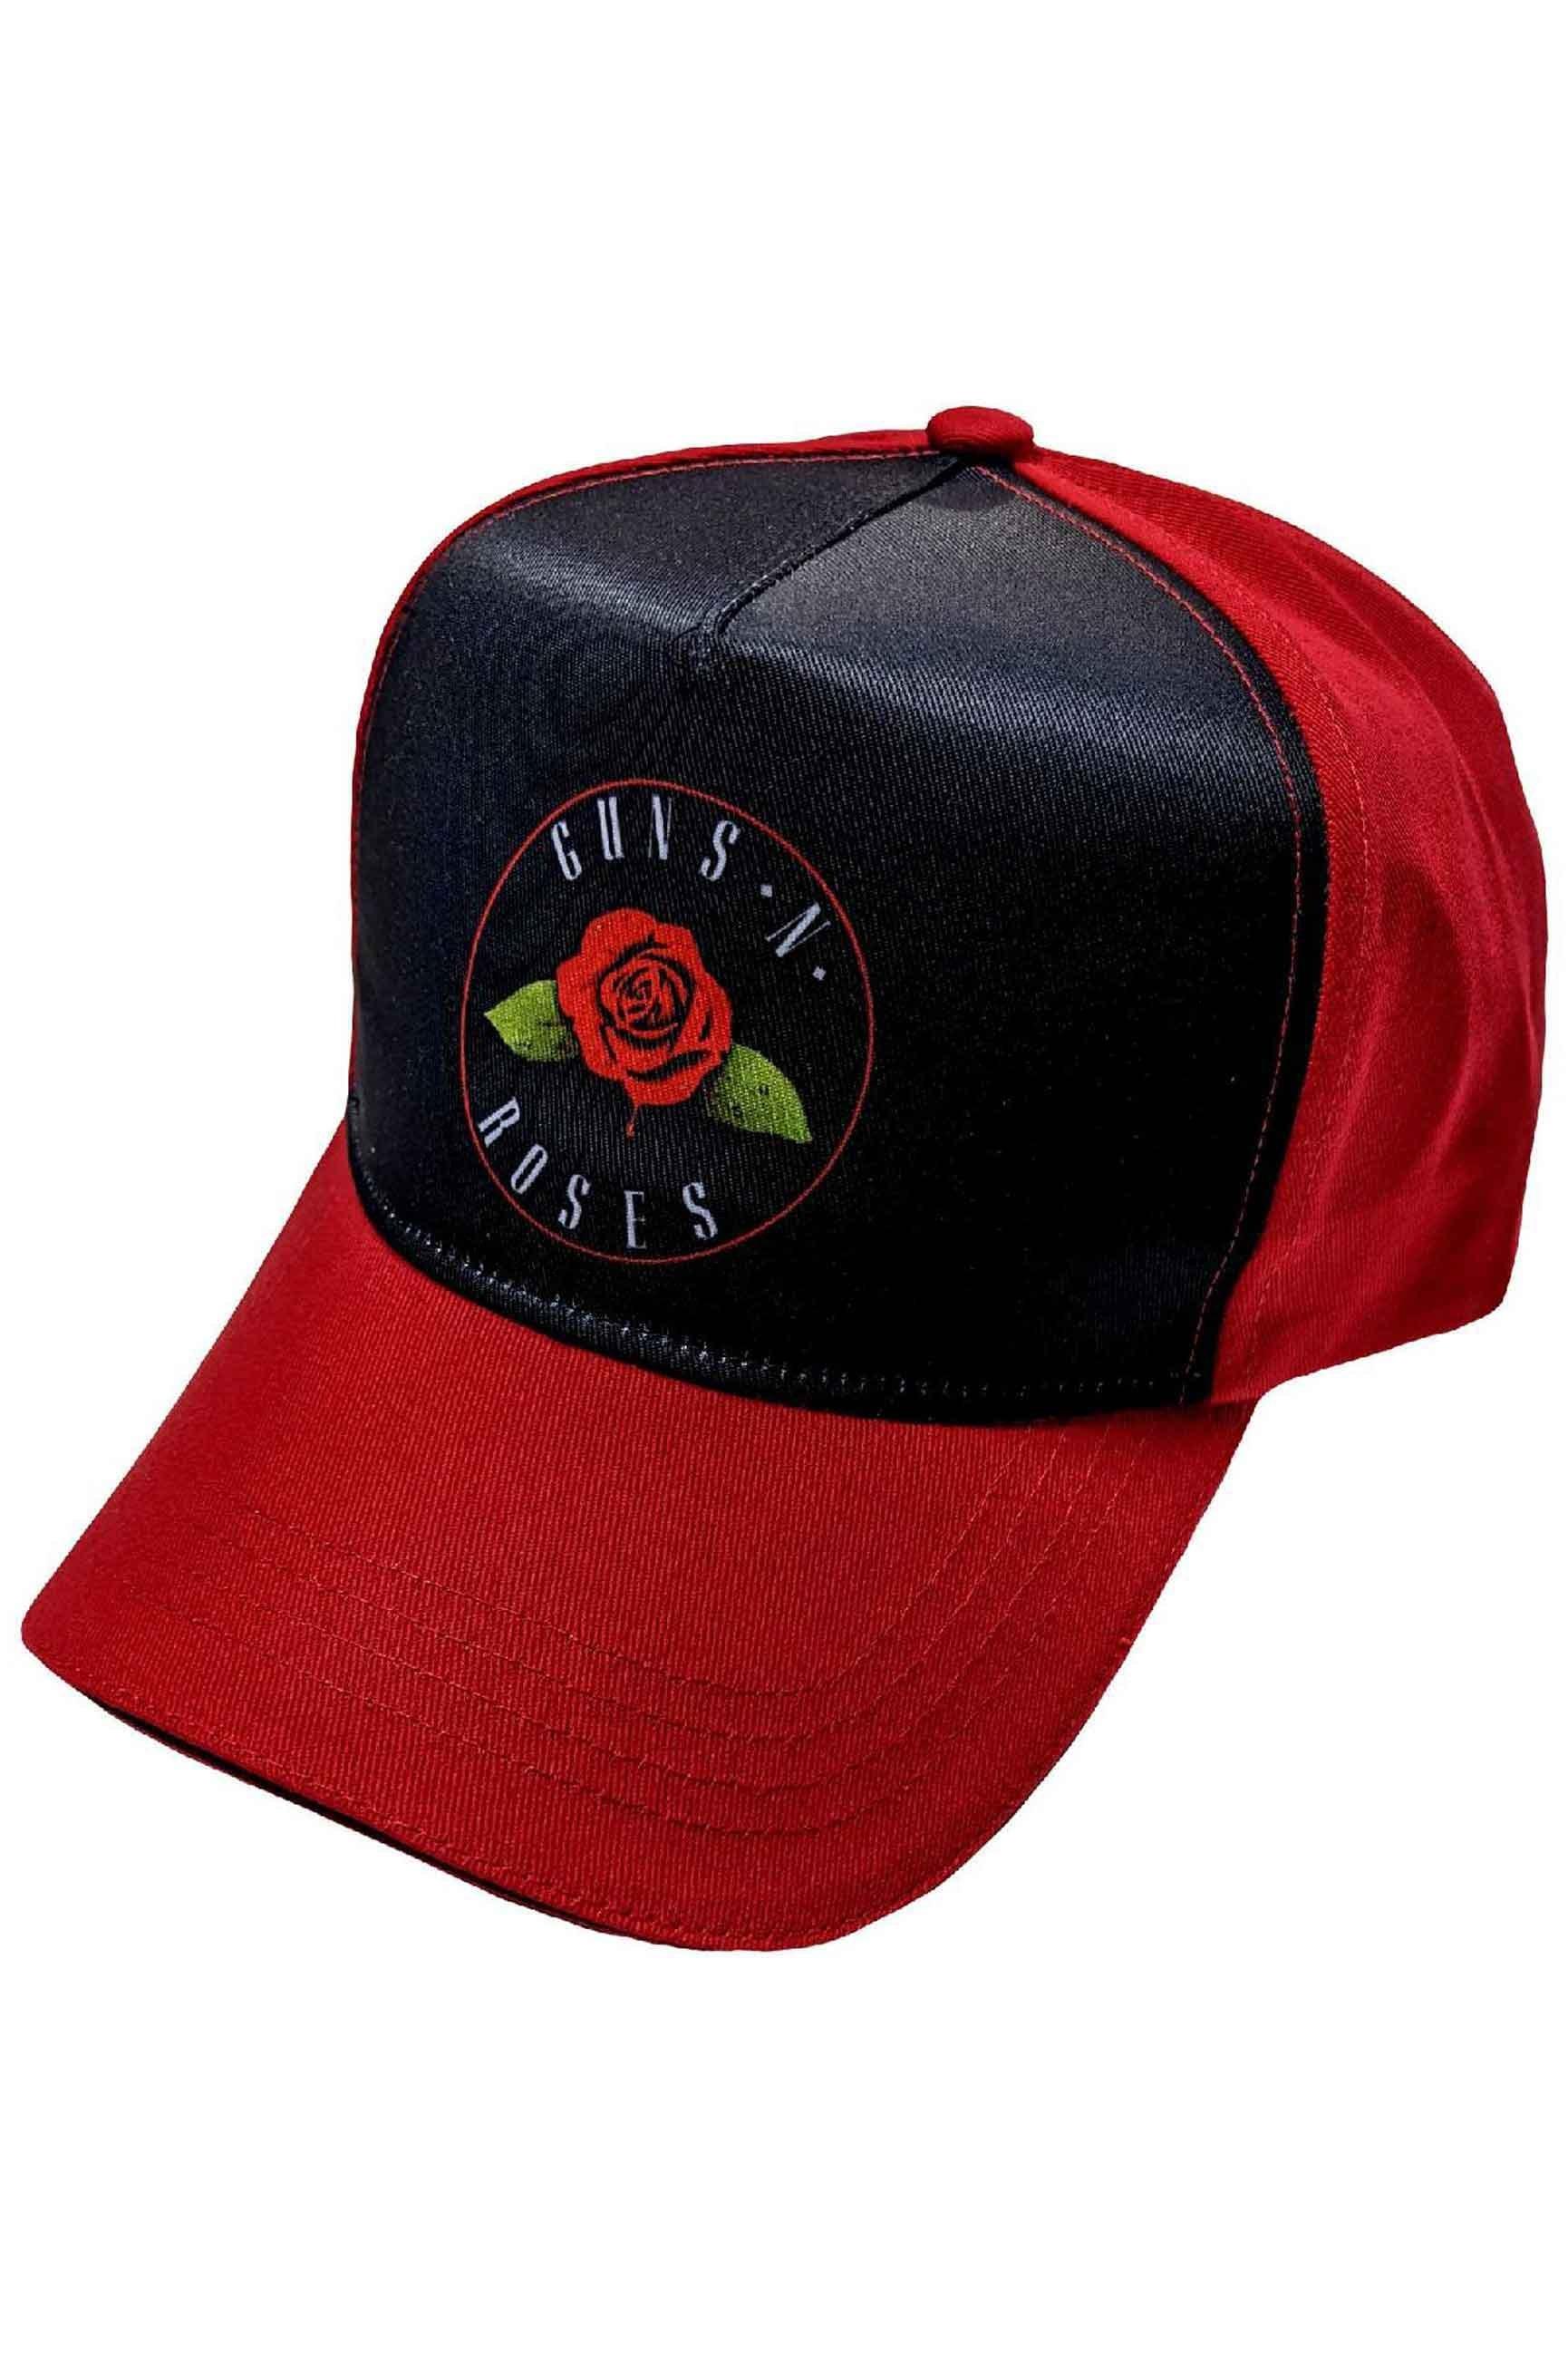 Бейсбольная кепка с логотипом Rose Band Guns N Roses, красный бейсболка bubble красная с белым